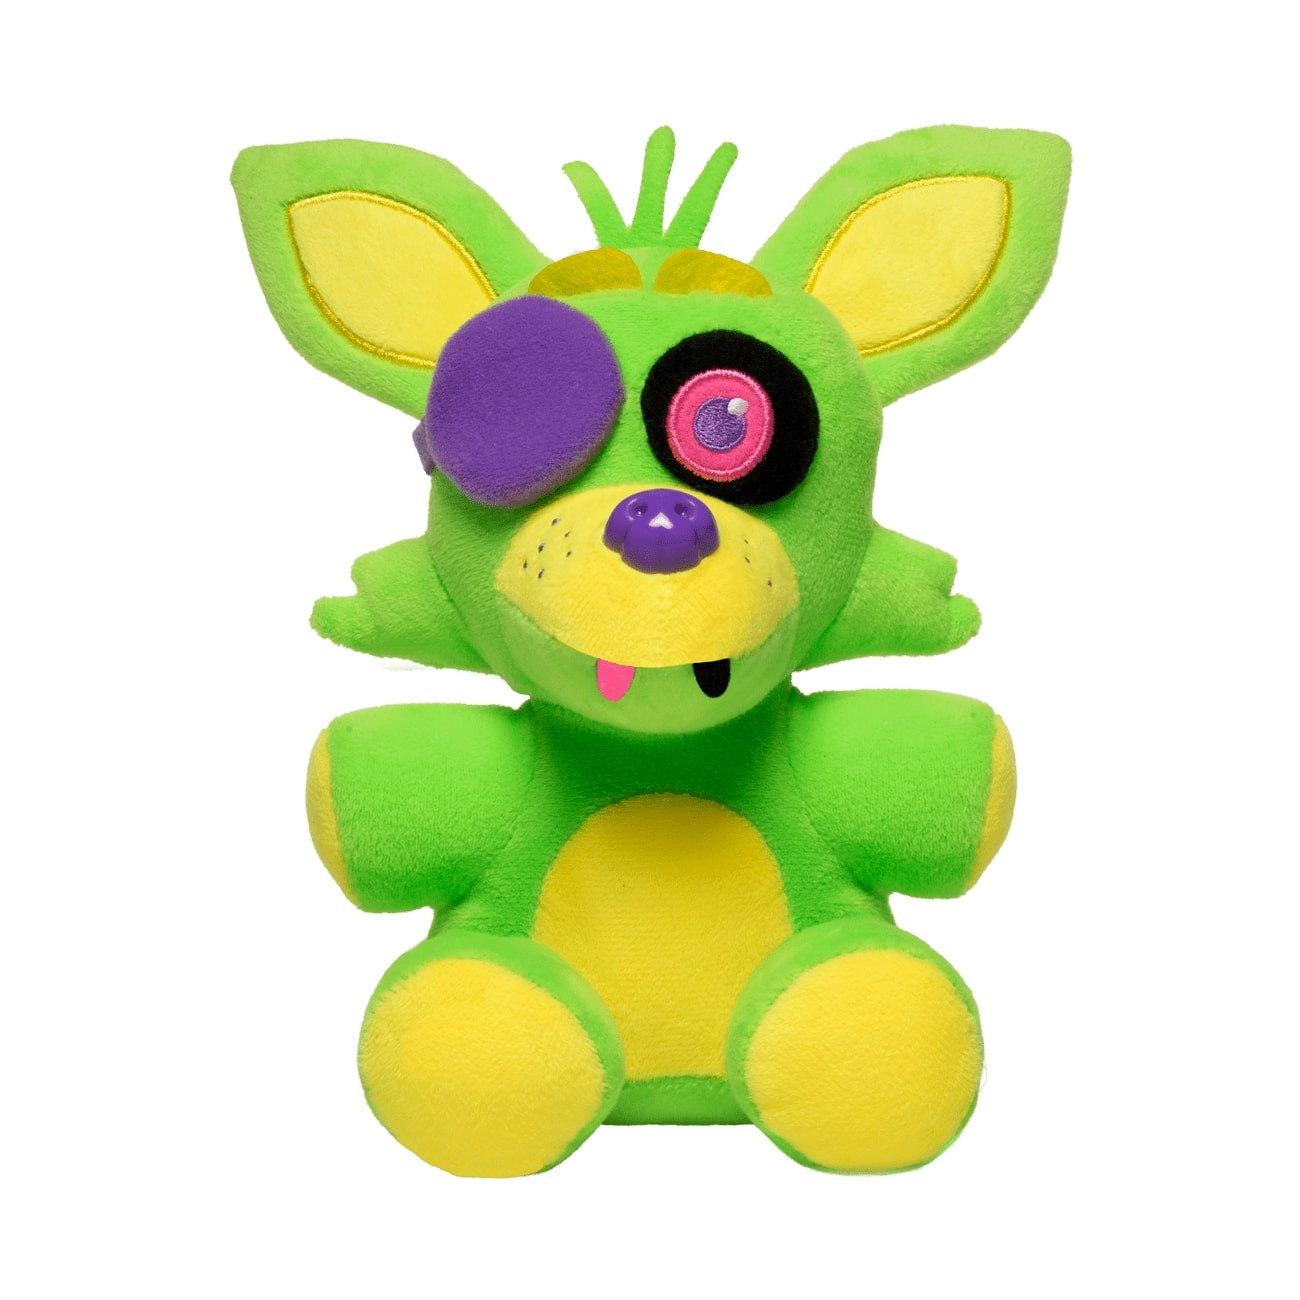 Funko Five Nights At Freddy's Green Blacklight Foxy Plush Toy